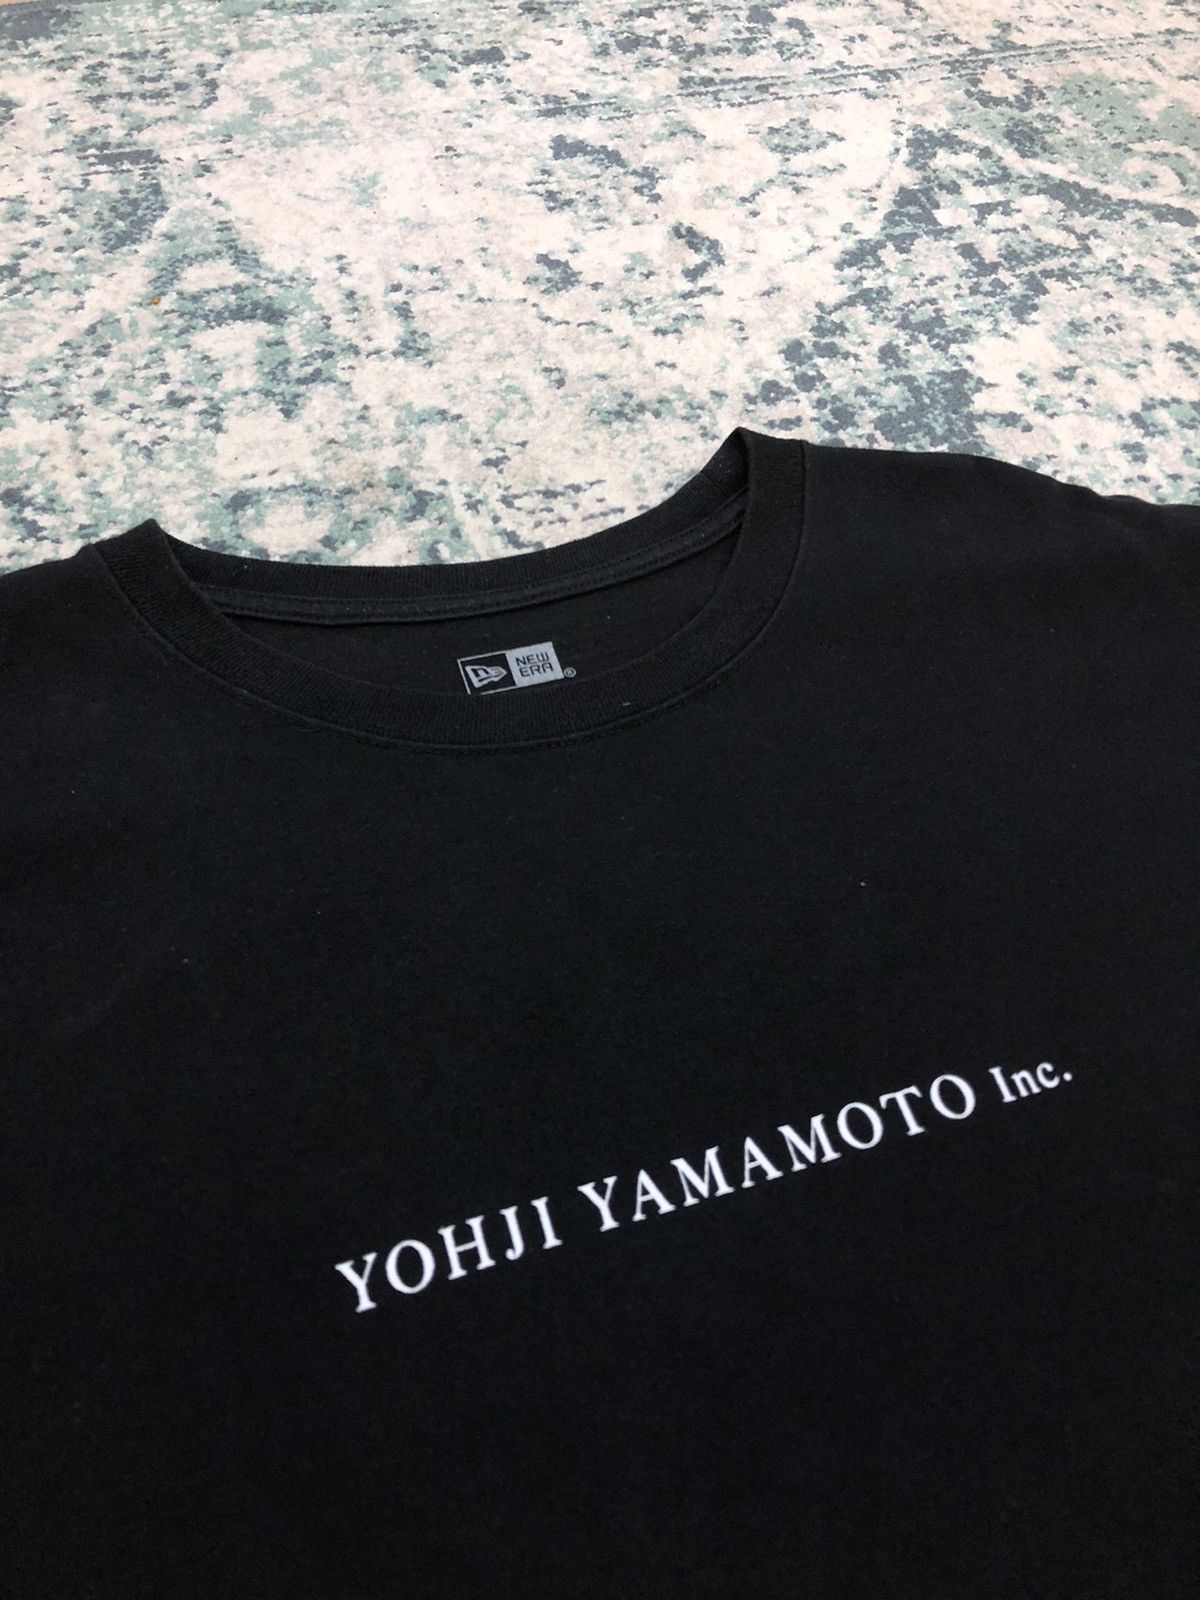 AW/20 Yohji Yamamoto X New Era 100th Anniversary All Logo - 4